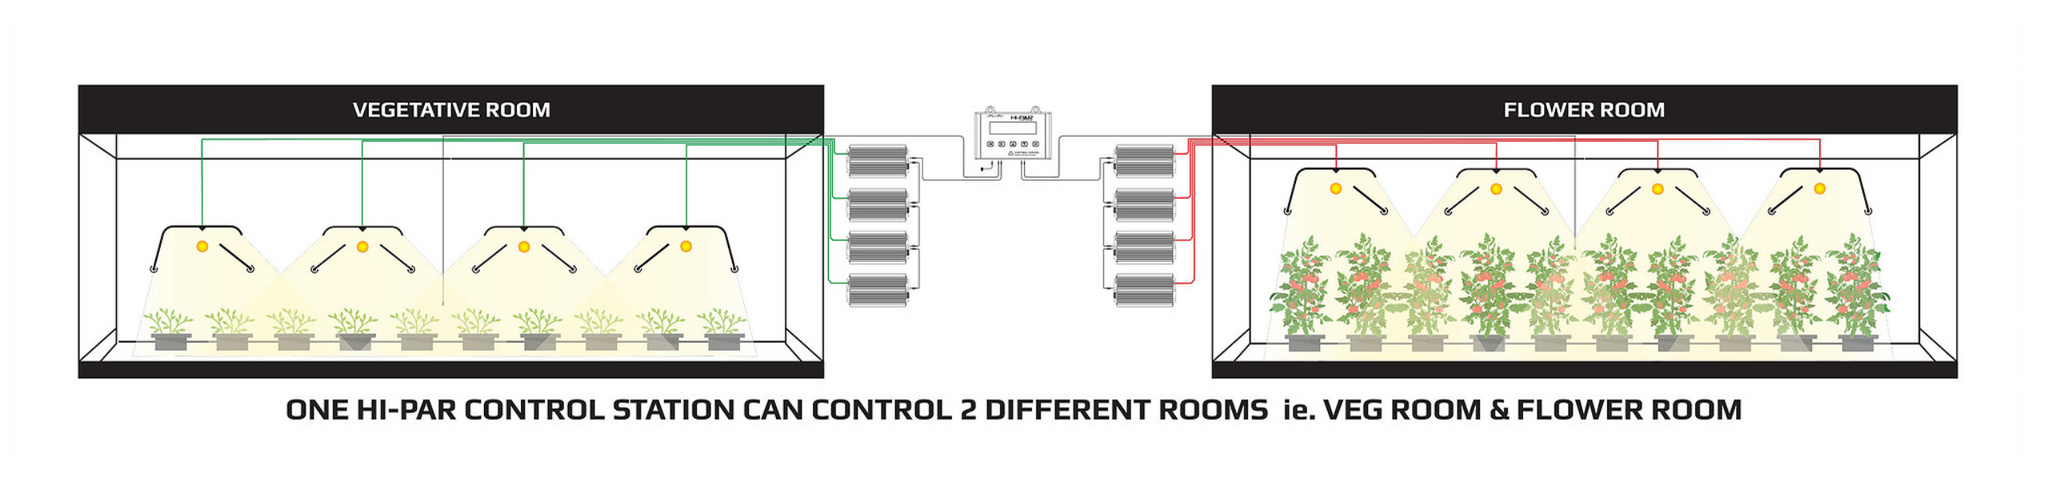 hipar control station two rooms zones hi-par control